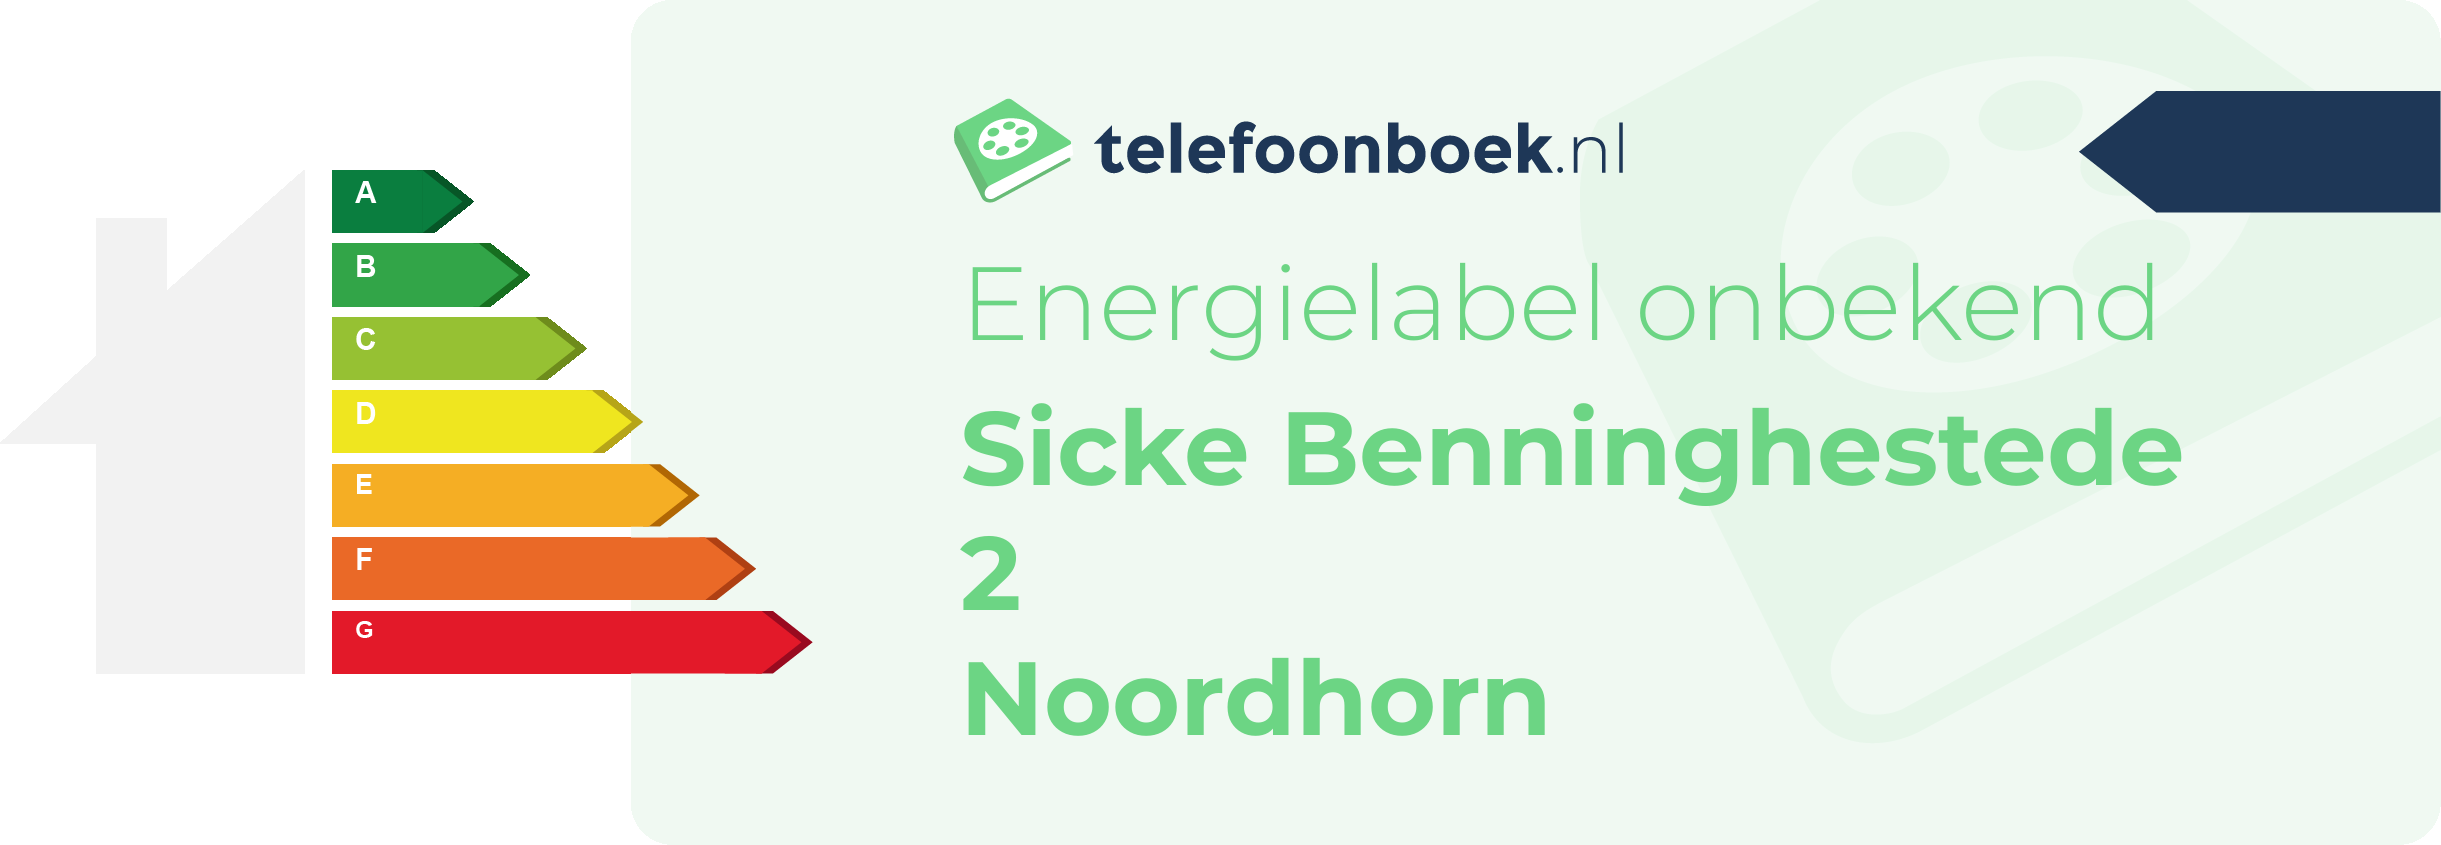 Energielabel Sicke Benninghestede 2 Noordhorn